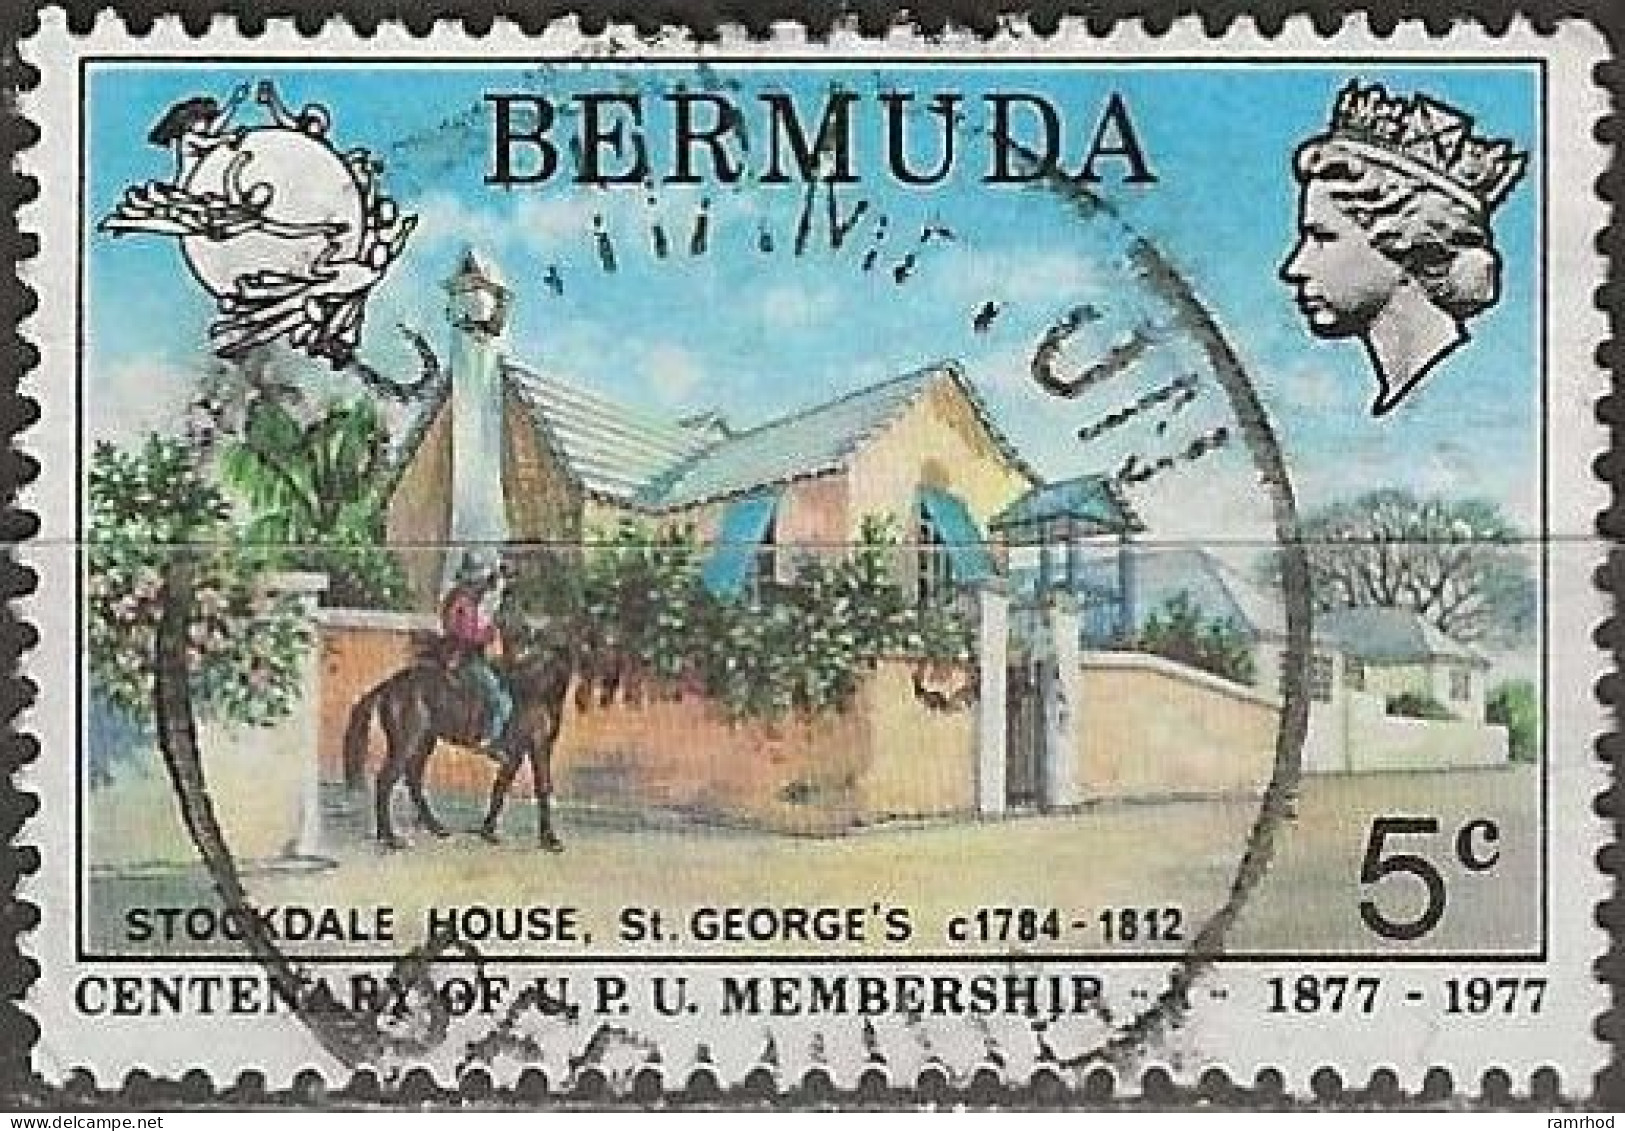 BERMUDA 1977 Centenary Of UPU Membership - 5c - Stockdale House, St George's, 1784–1812 FU - Bermudes